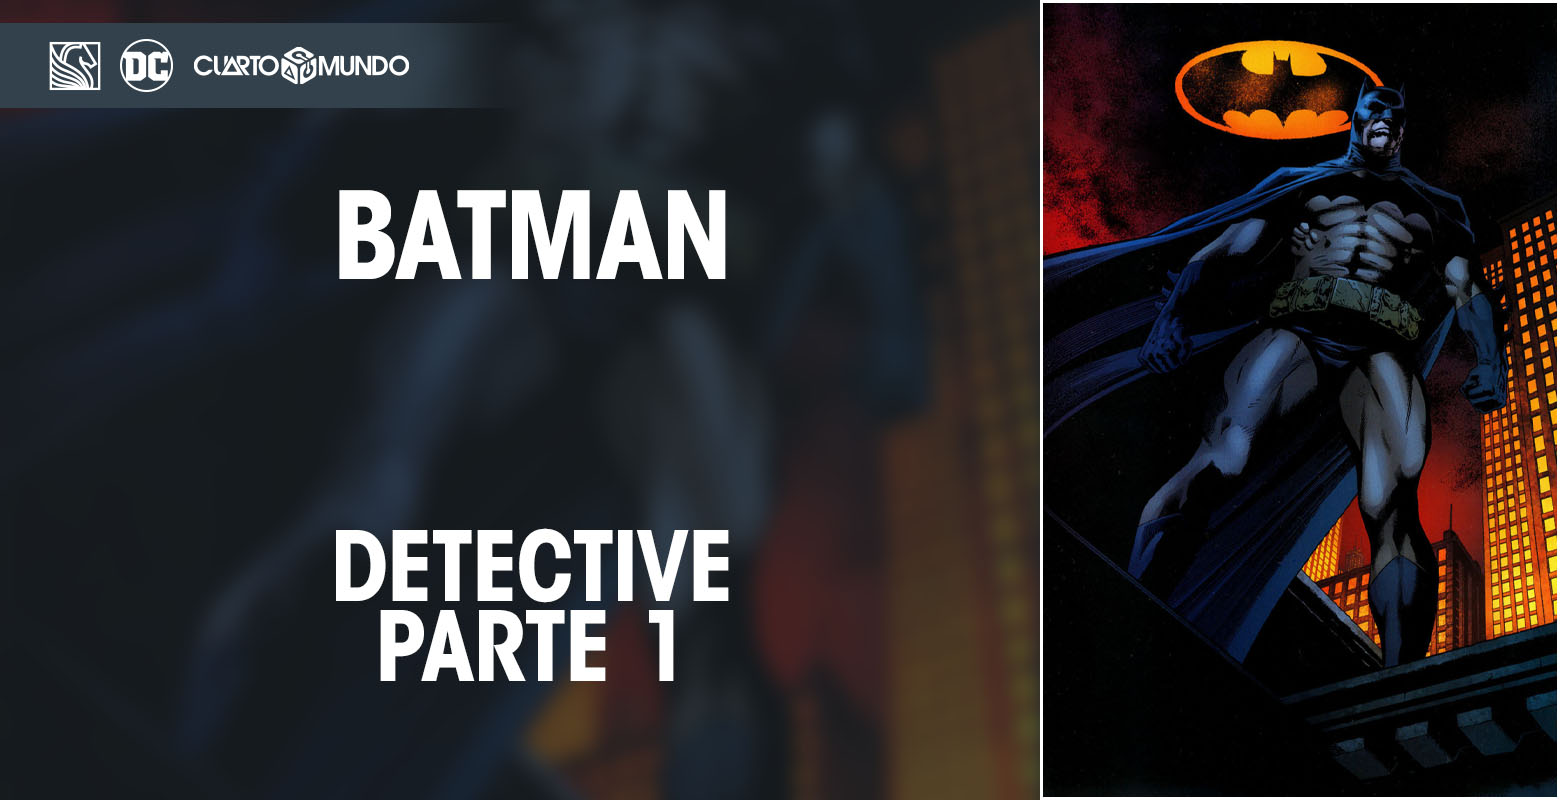 DC Salvat - Batman: Detective Parte 1 • Cuarto Mundo